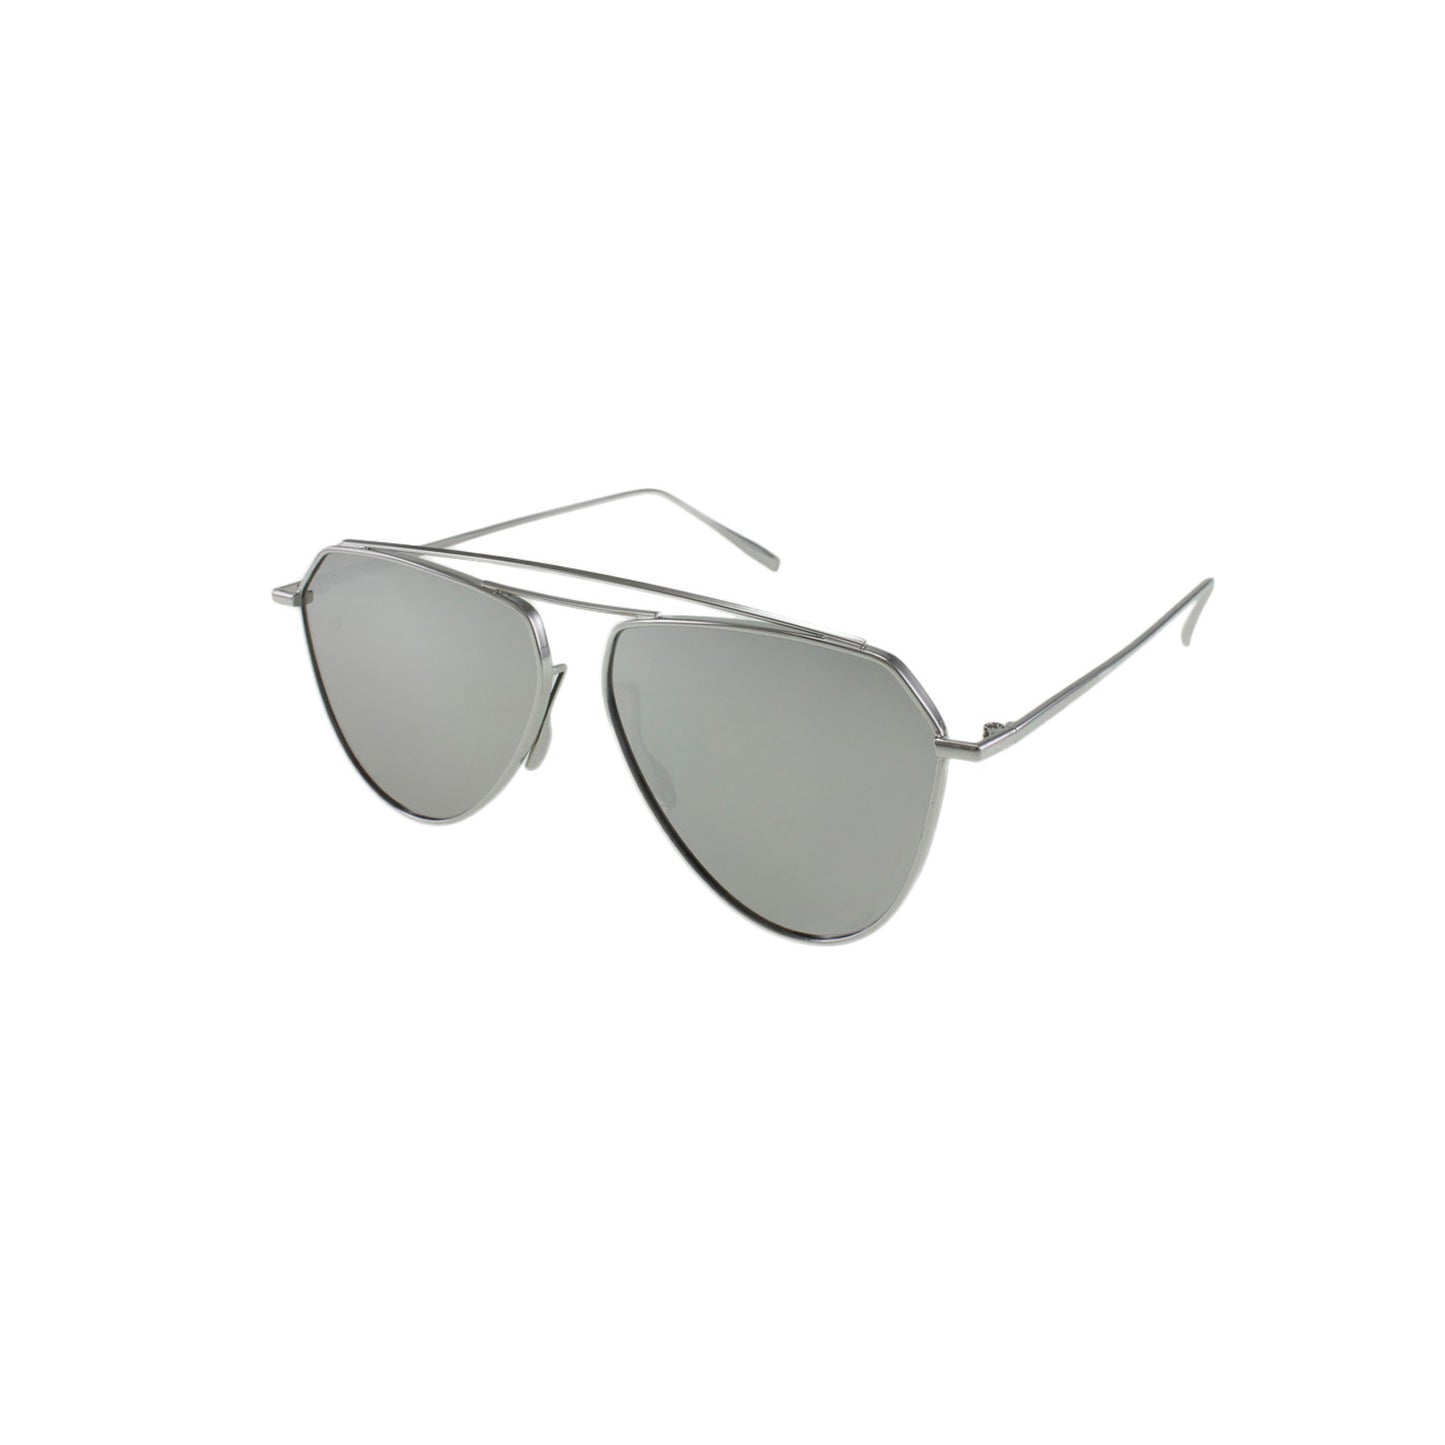 Jase New York Jonas Sunglasses in Silver